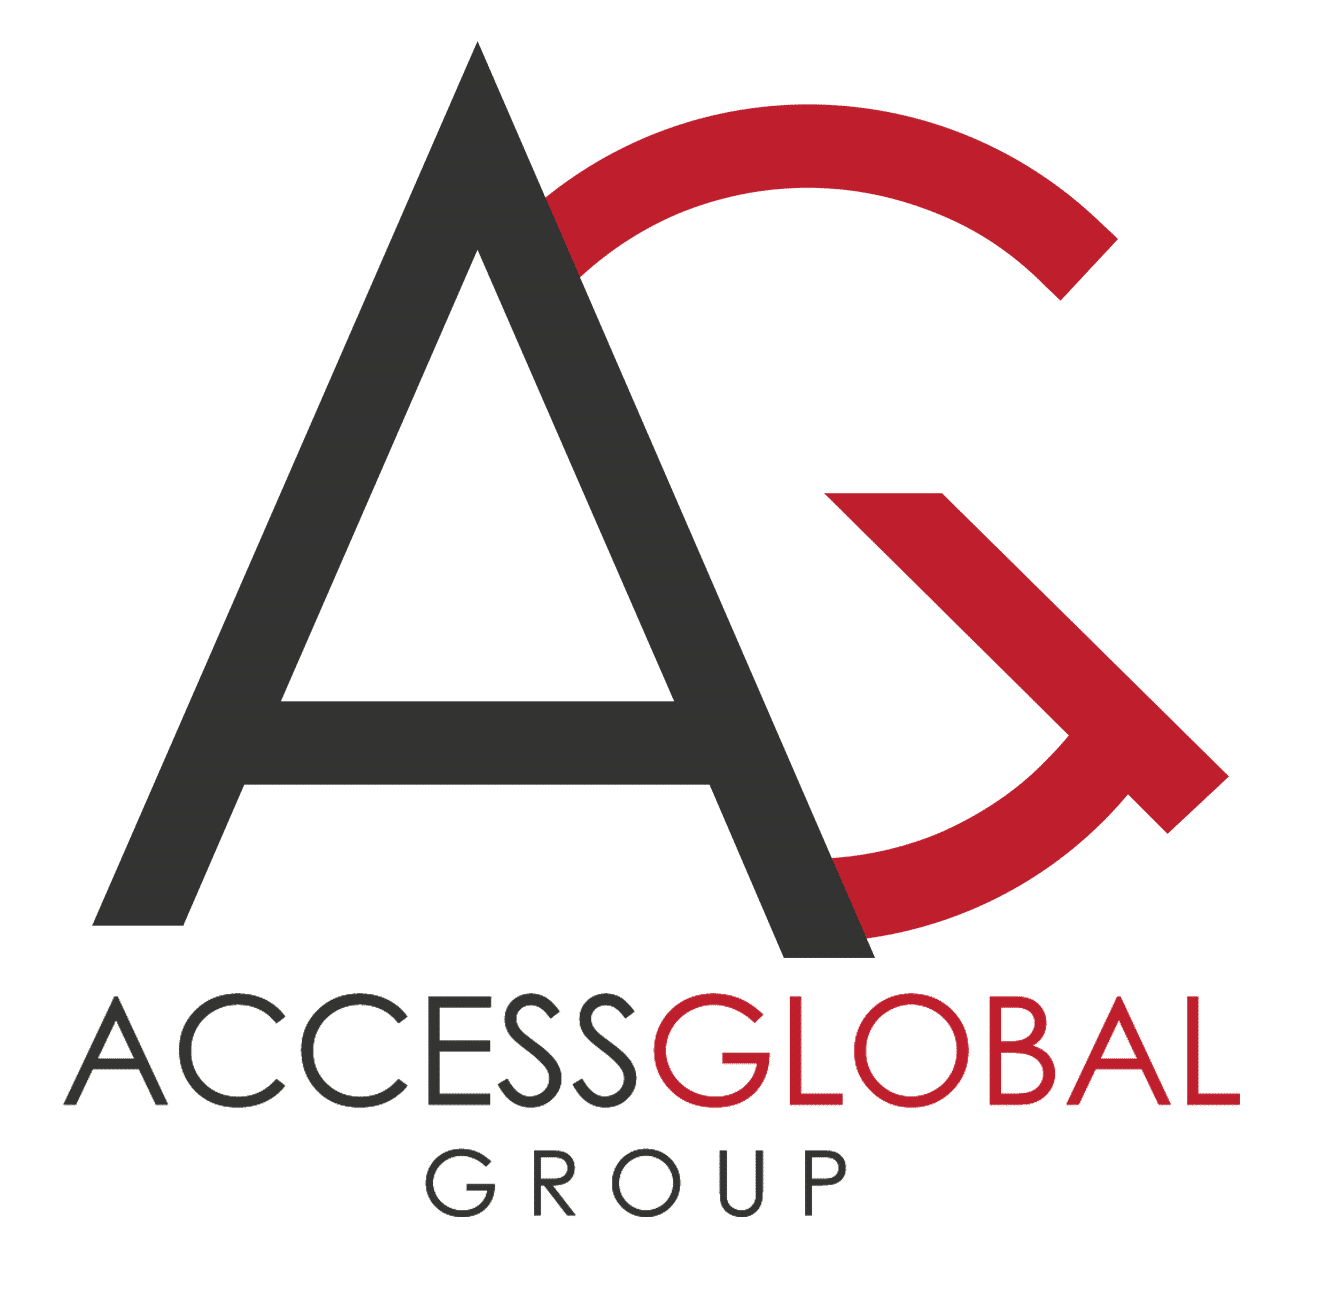 Access группа. Global Group Ltd.